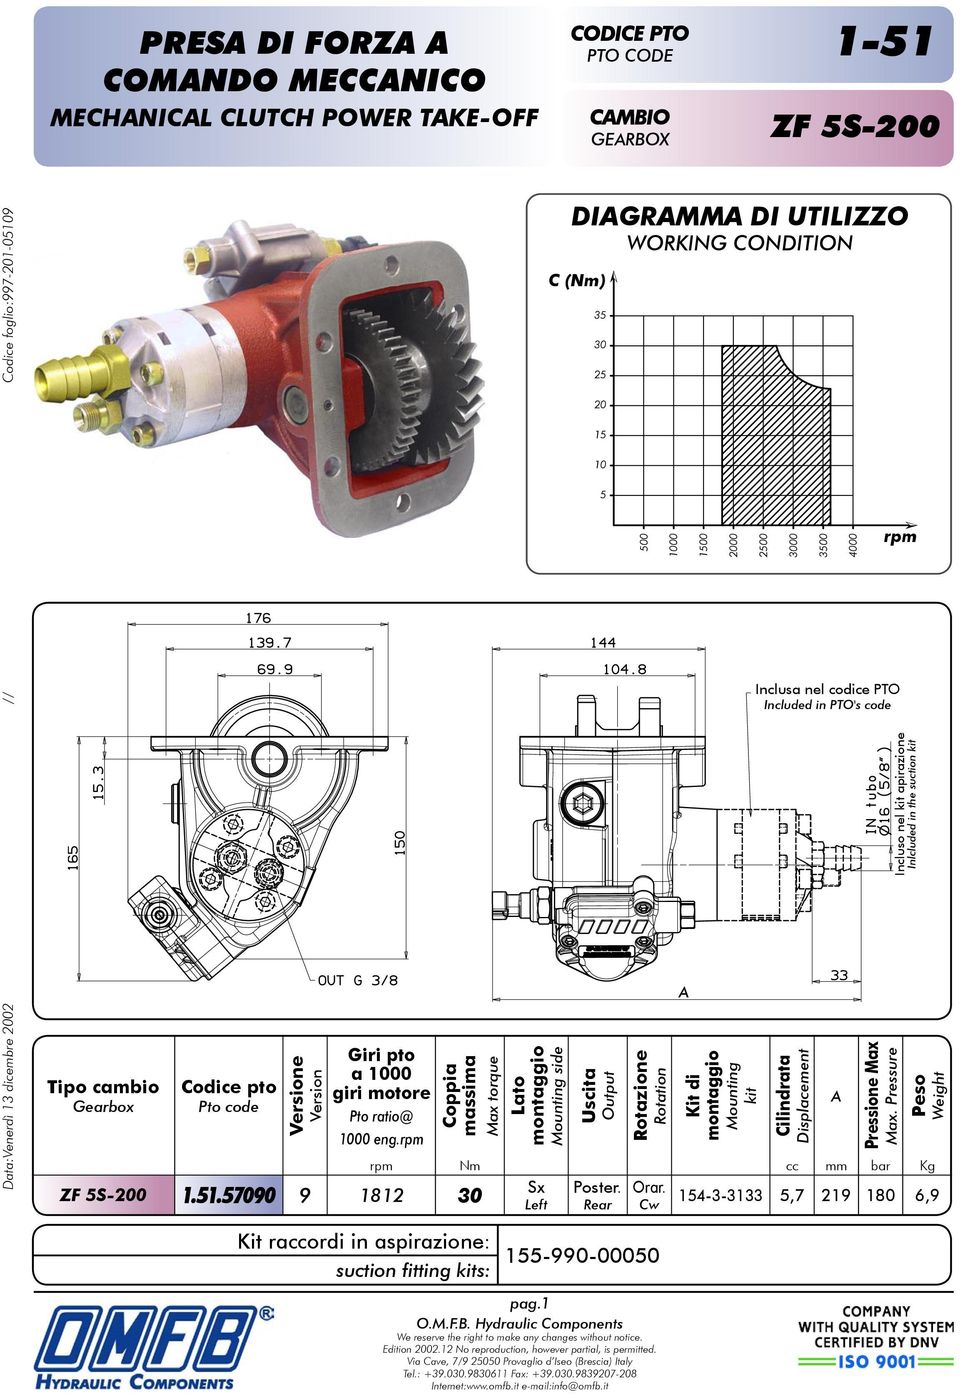 154-3-3133 5,7 219 180 6,9 Left Rear Cw Kit raccordi in aspirazione: suction fitting s: 155-990-00050 O.M.F.B. Hydraulic Components Edition 2002.